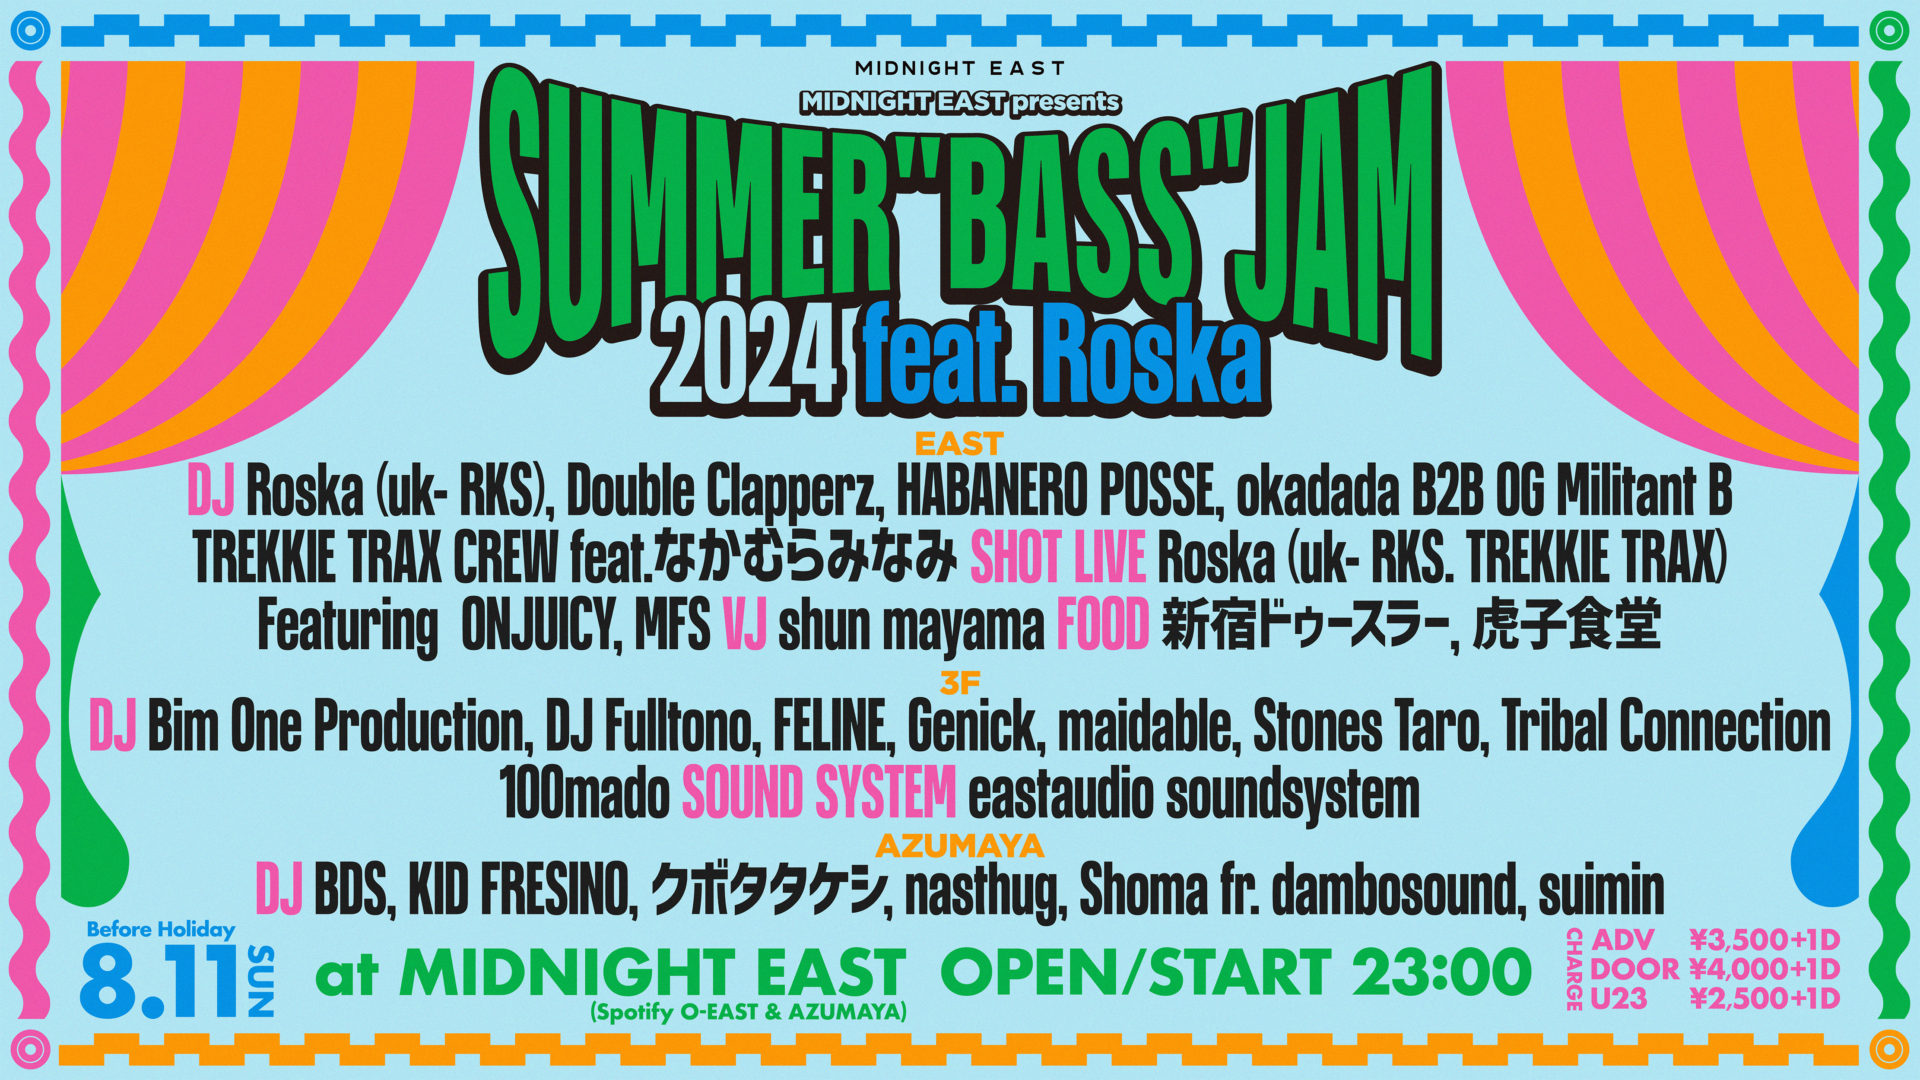 SUMMER “BASS” JAM 2024 feat. Roska| Spotify O-EAST・O-WEST・O-Crest・O-nest